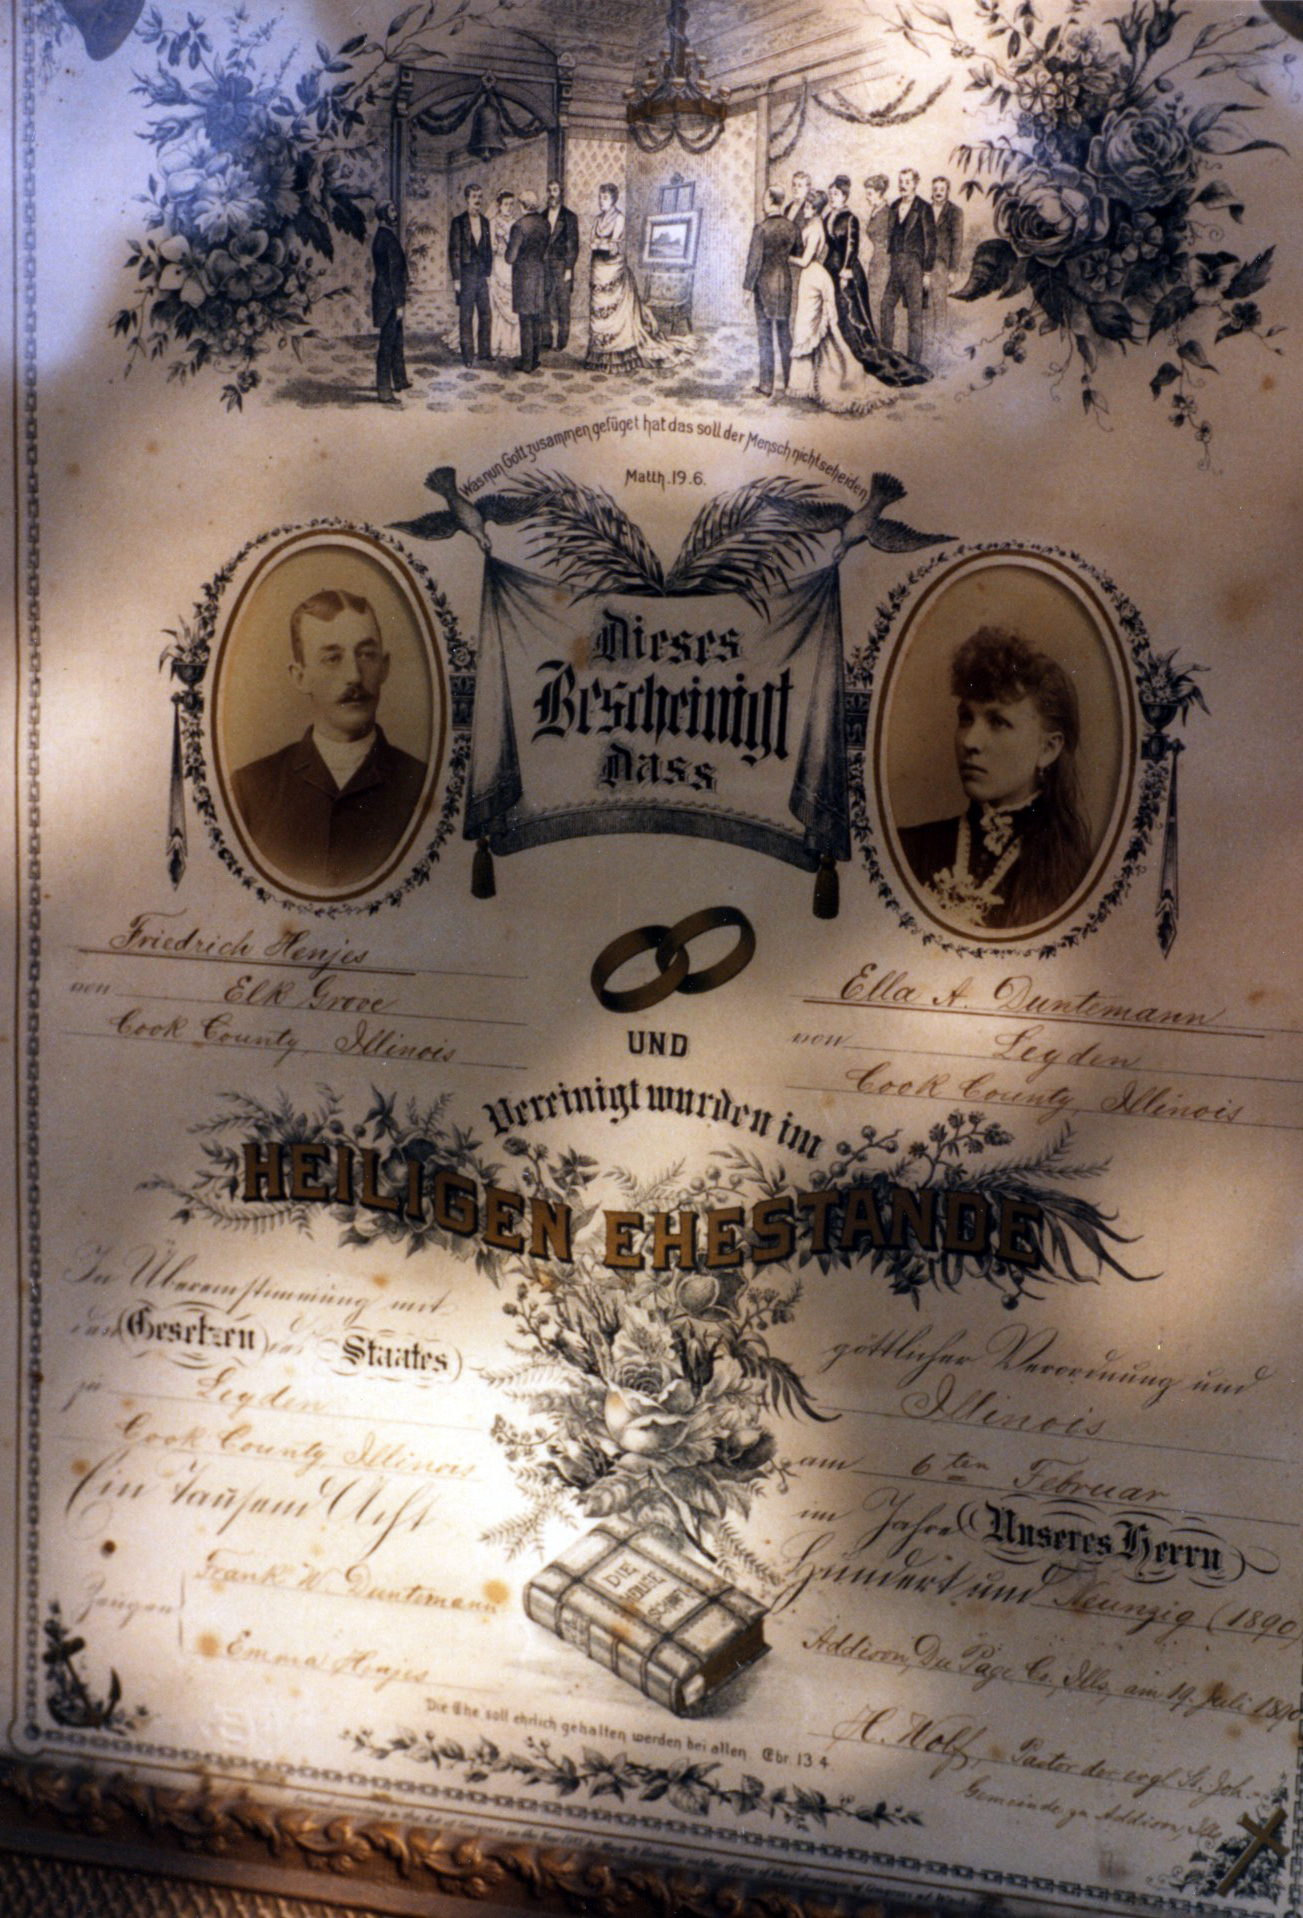 Fred Henjes and Ellen Duntemann wedding certificate